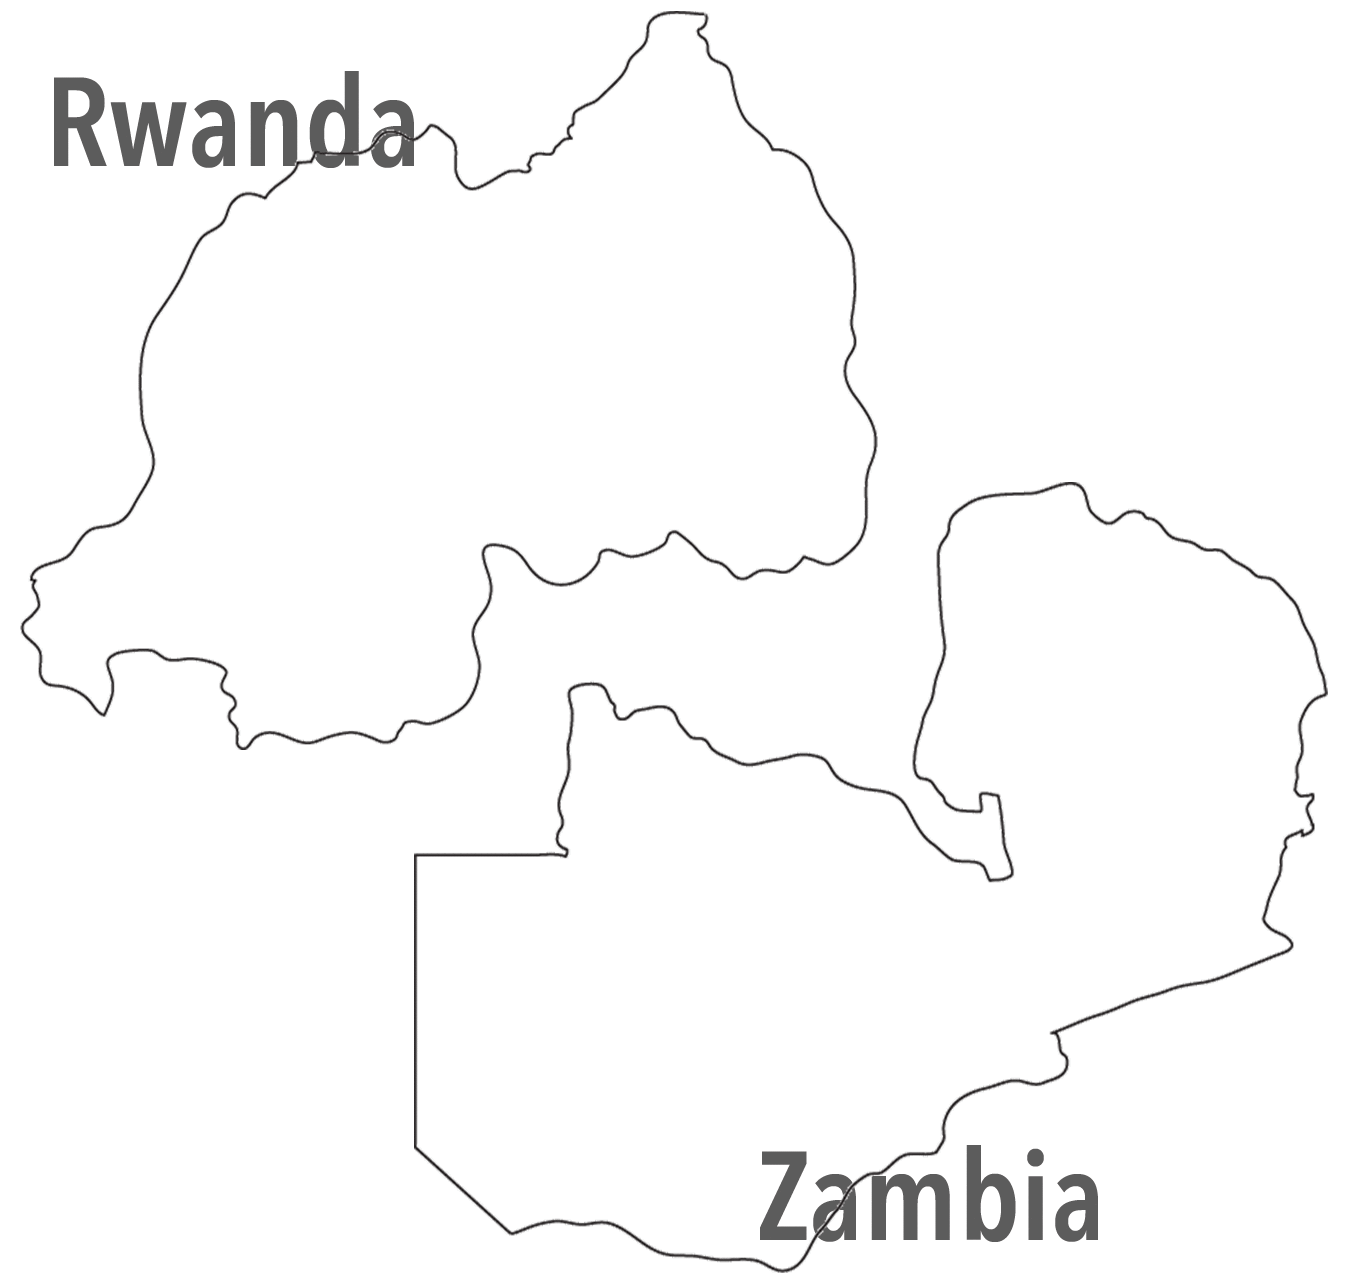 Rwanda and Zambia map outline